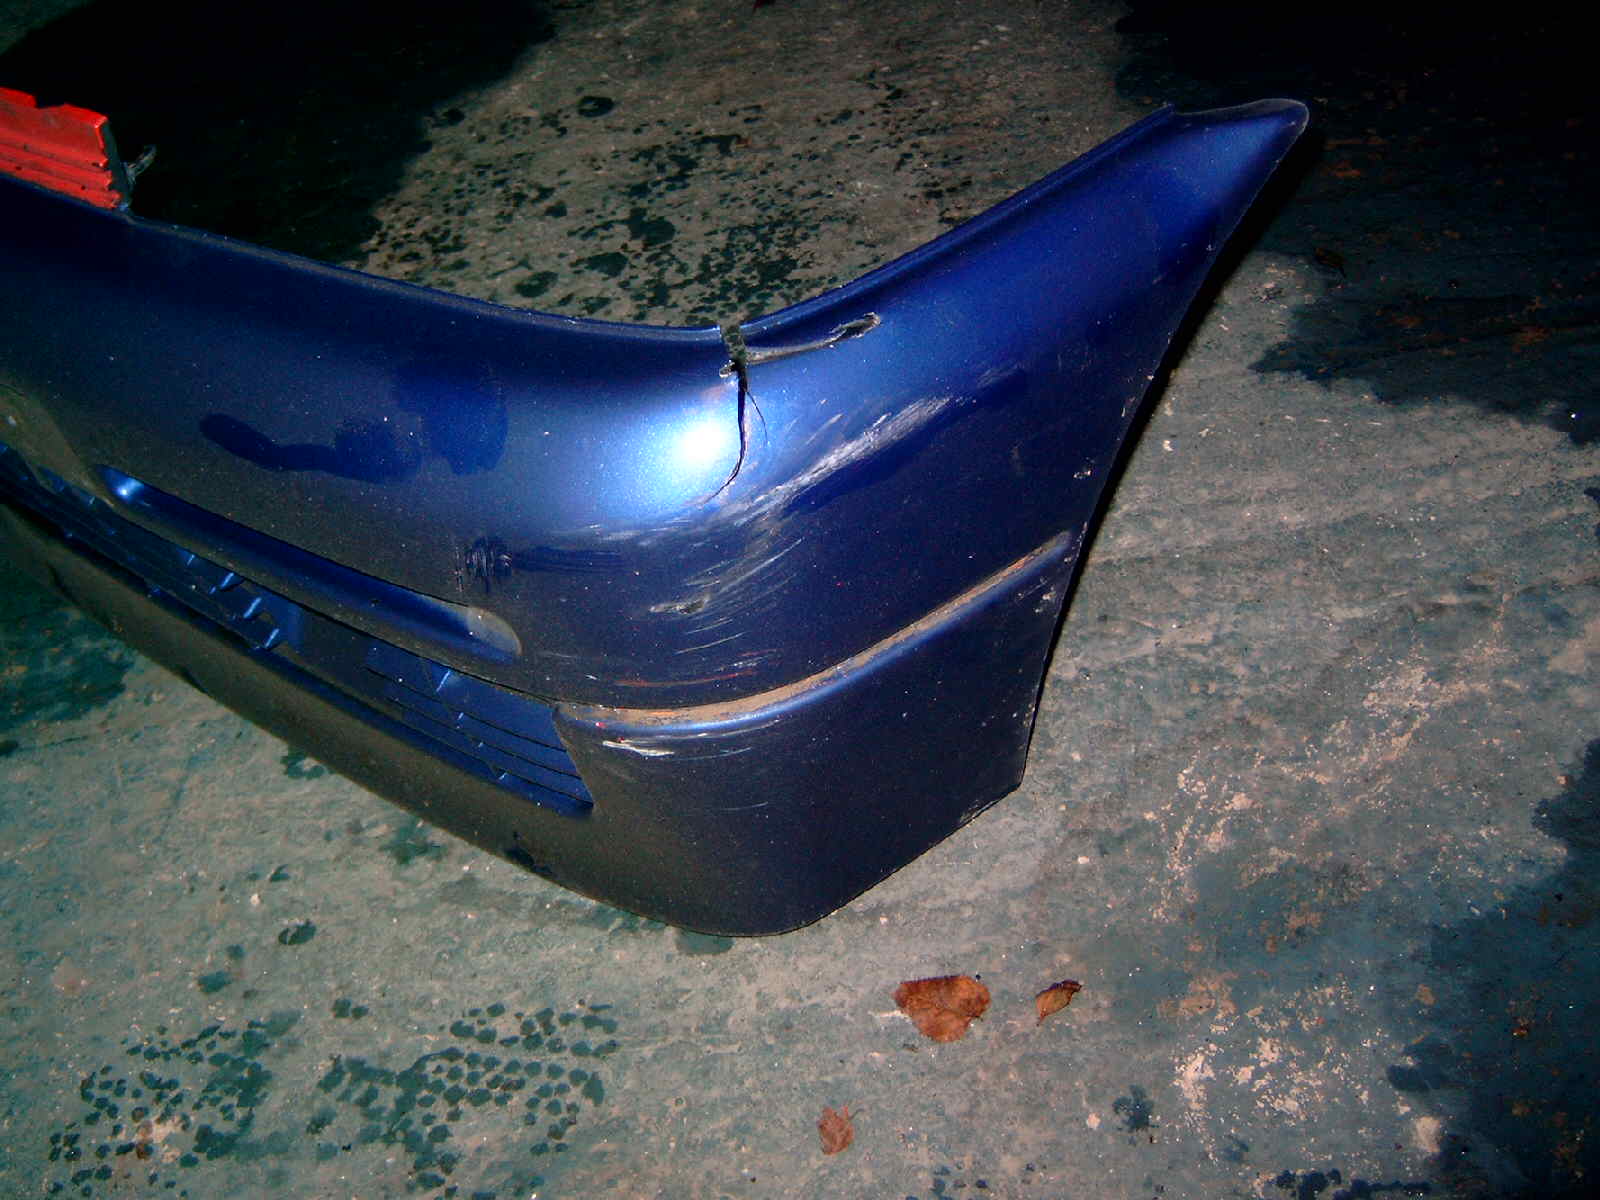 damaged bumper